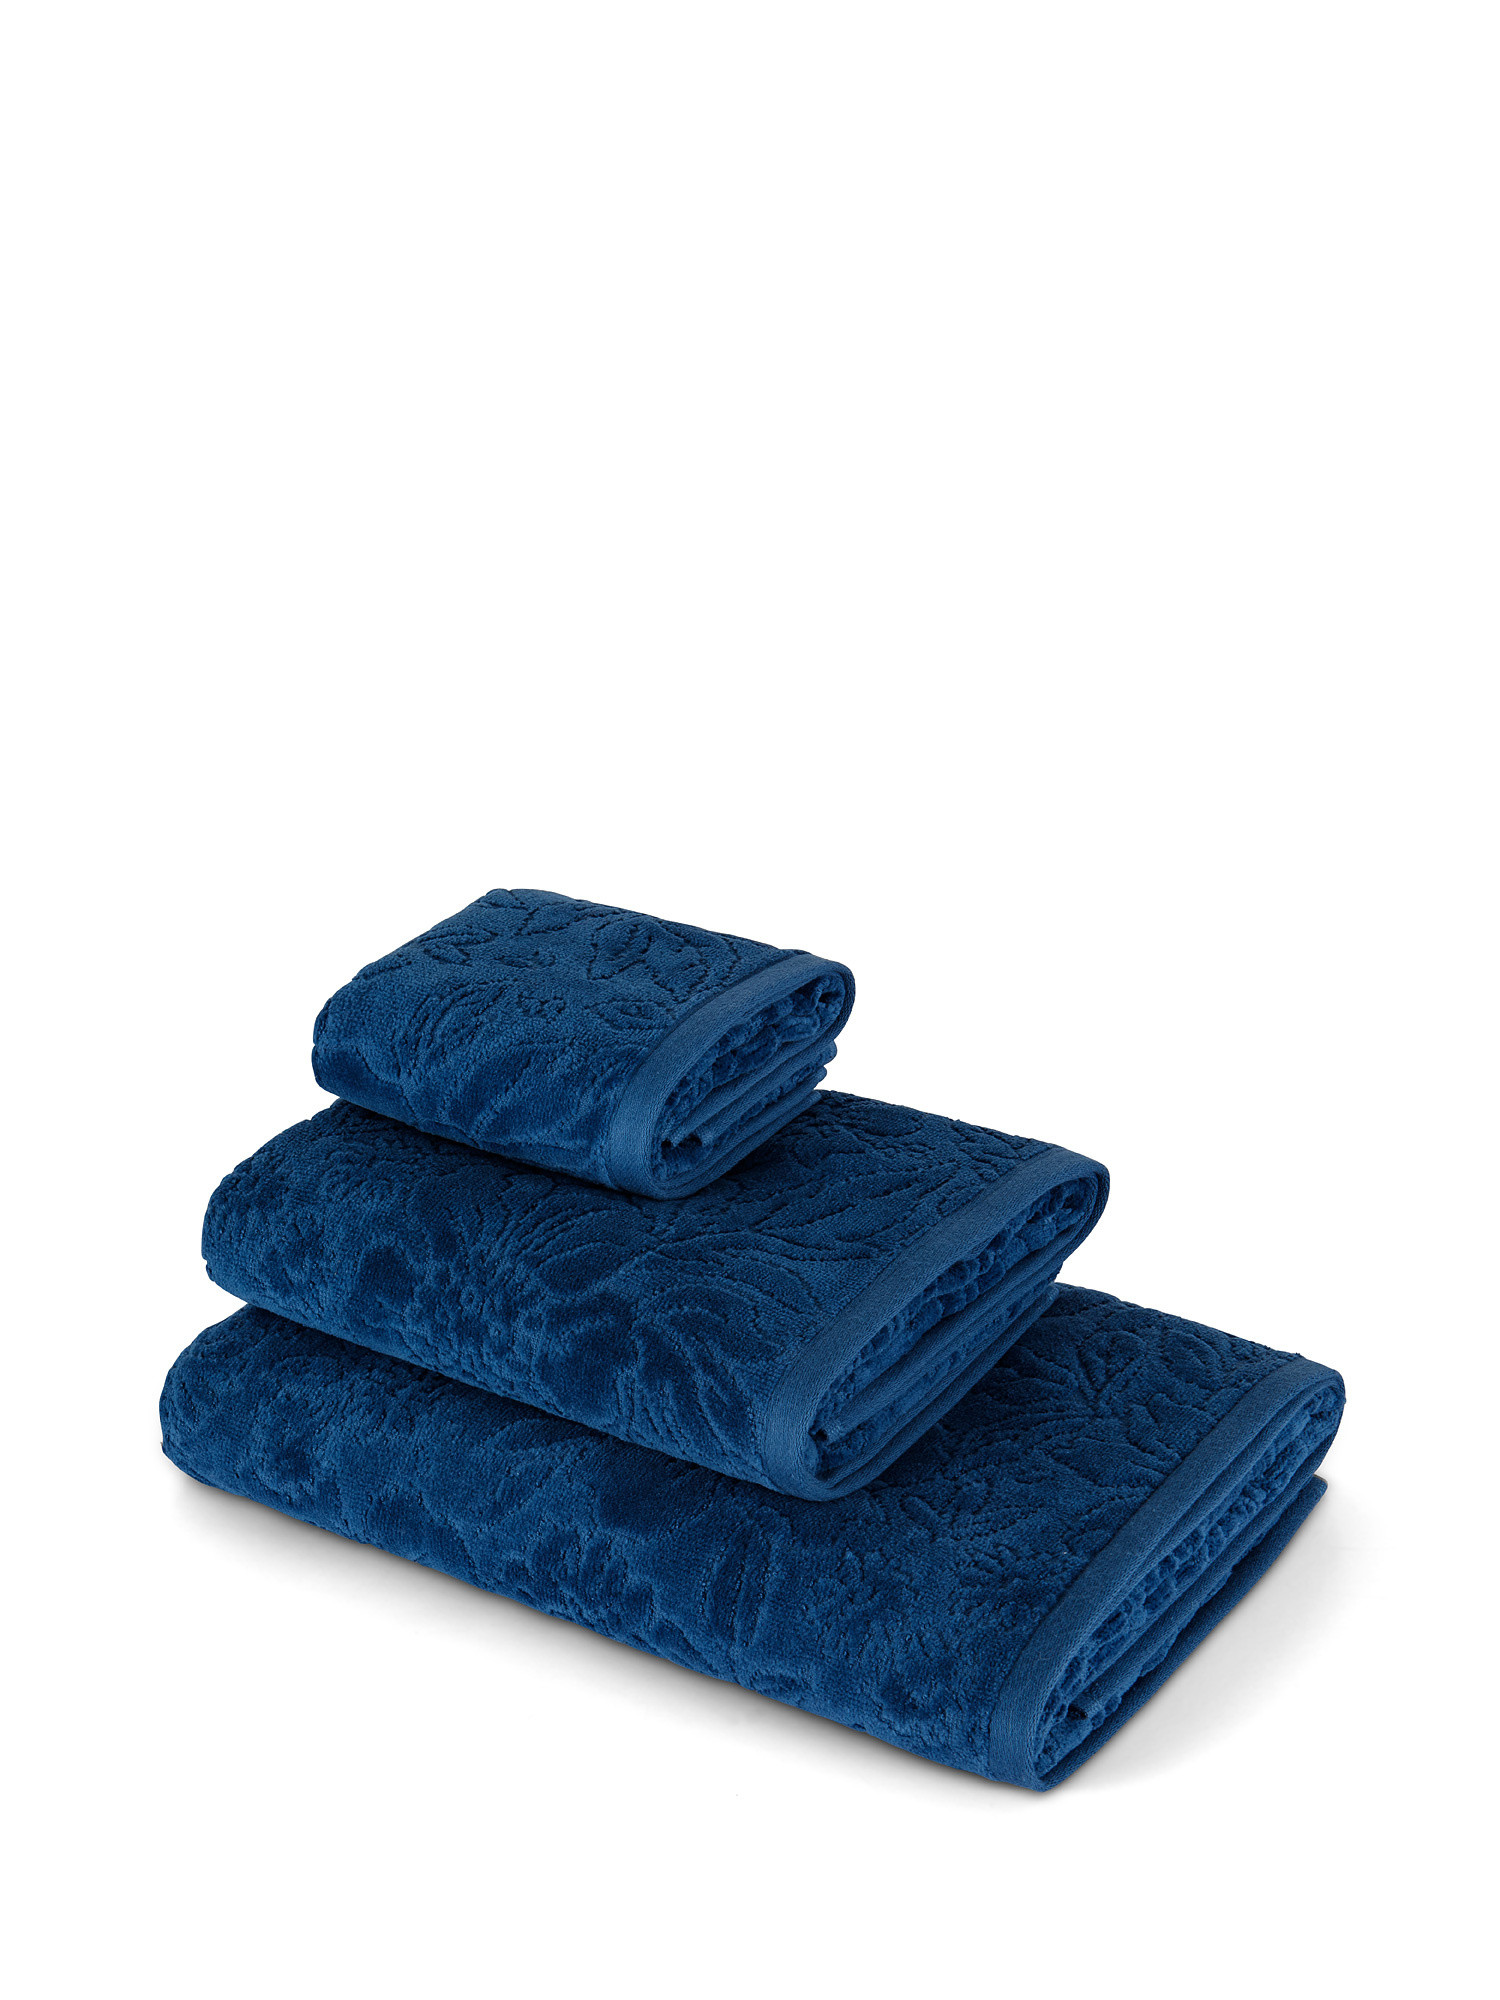 Asciugamano puro cotone lavorazione a fiori, Blu, large image number 0